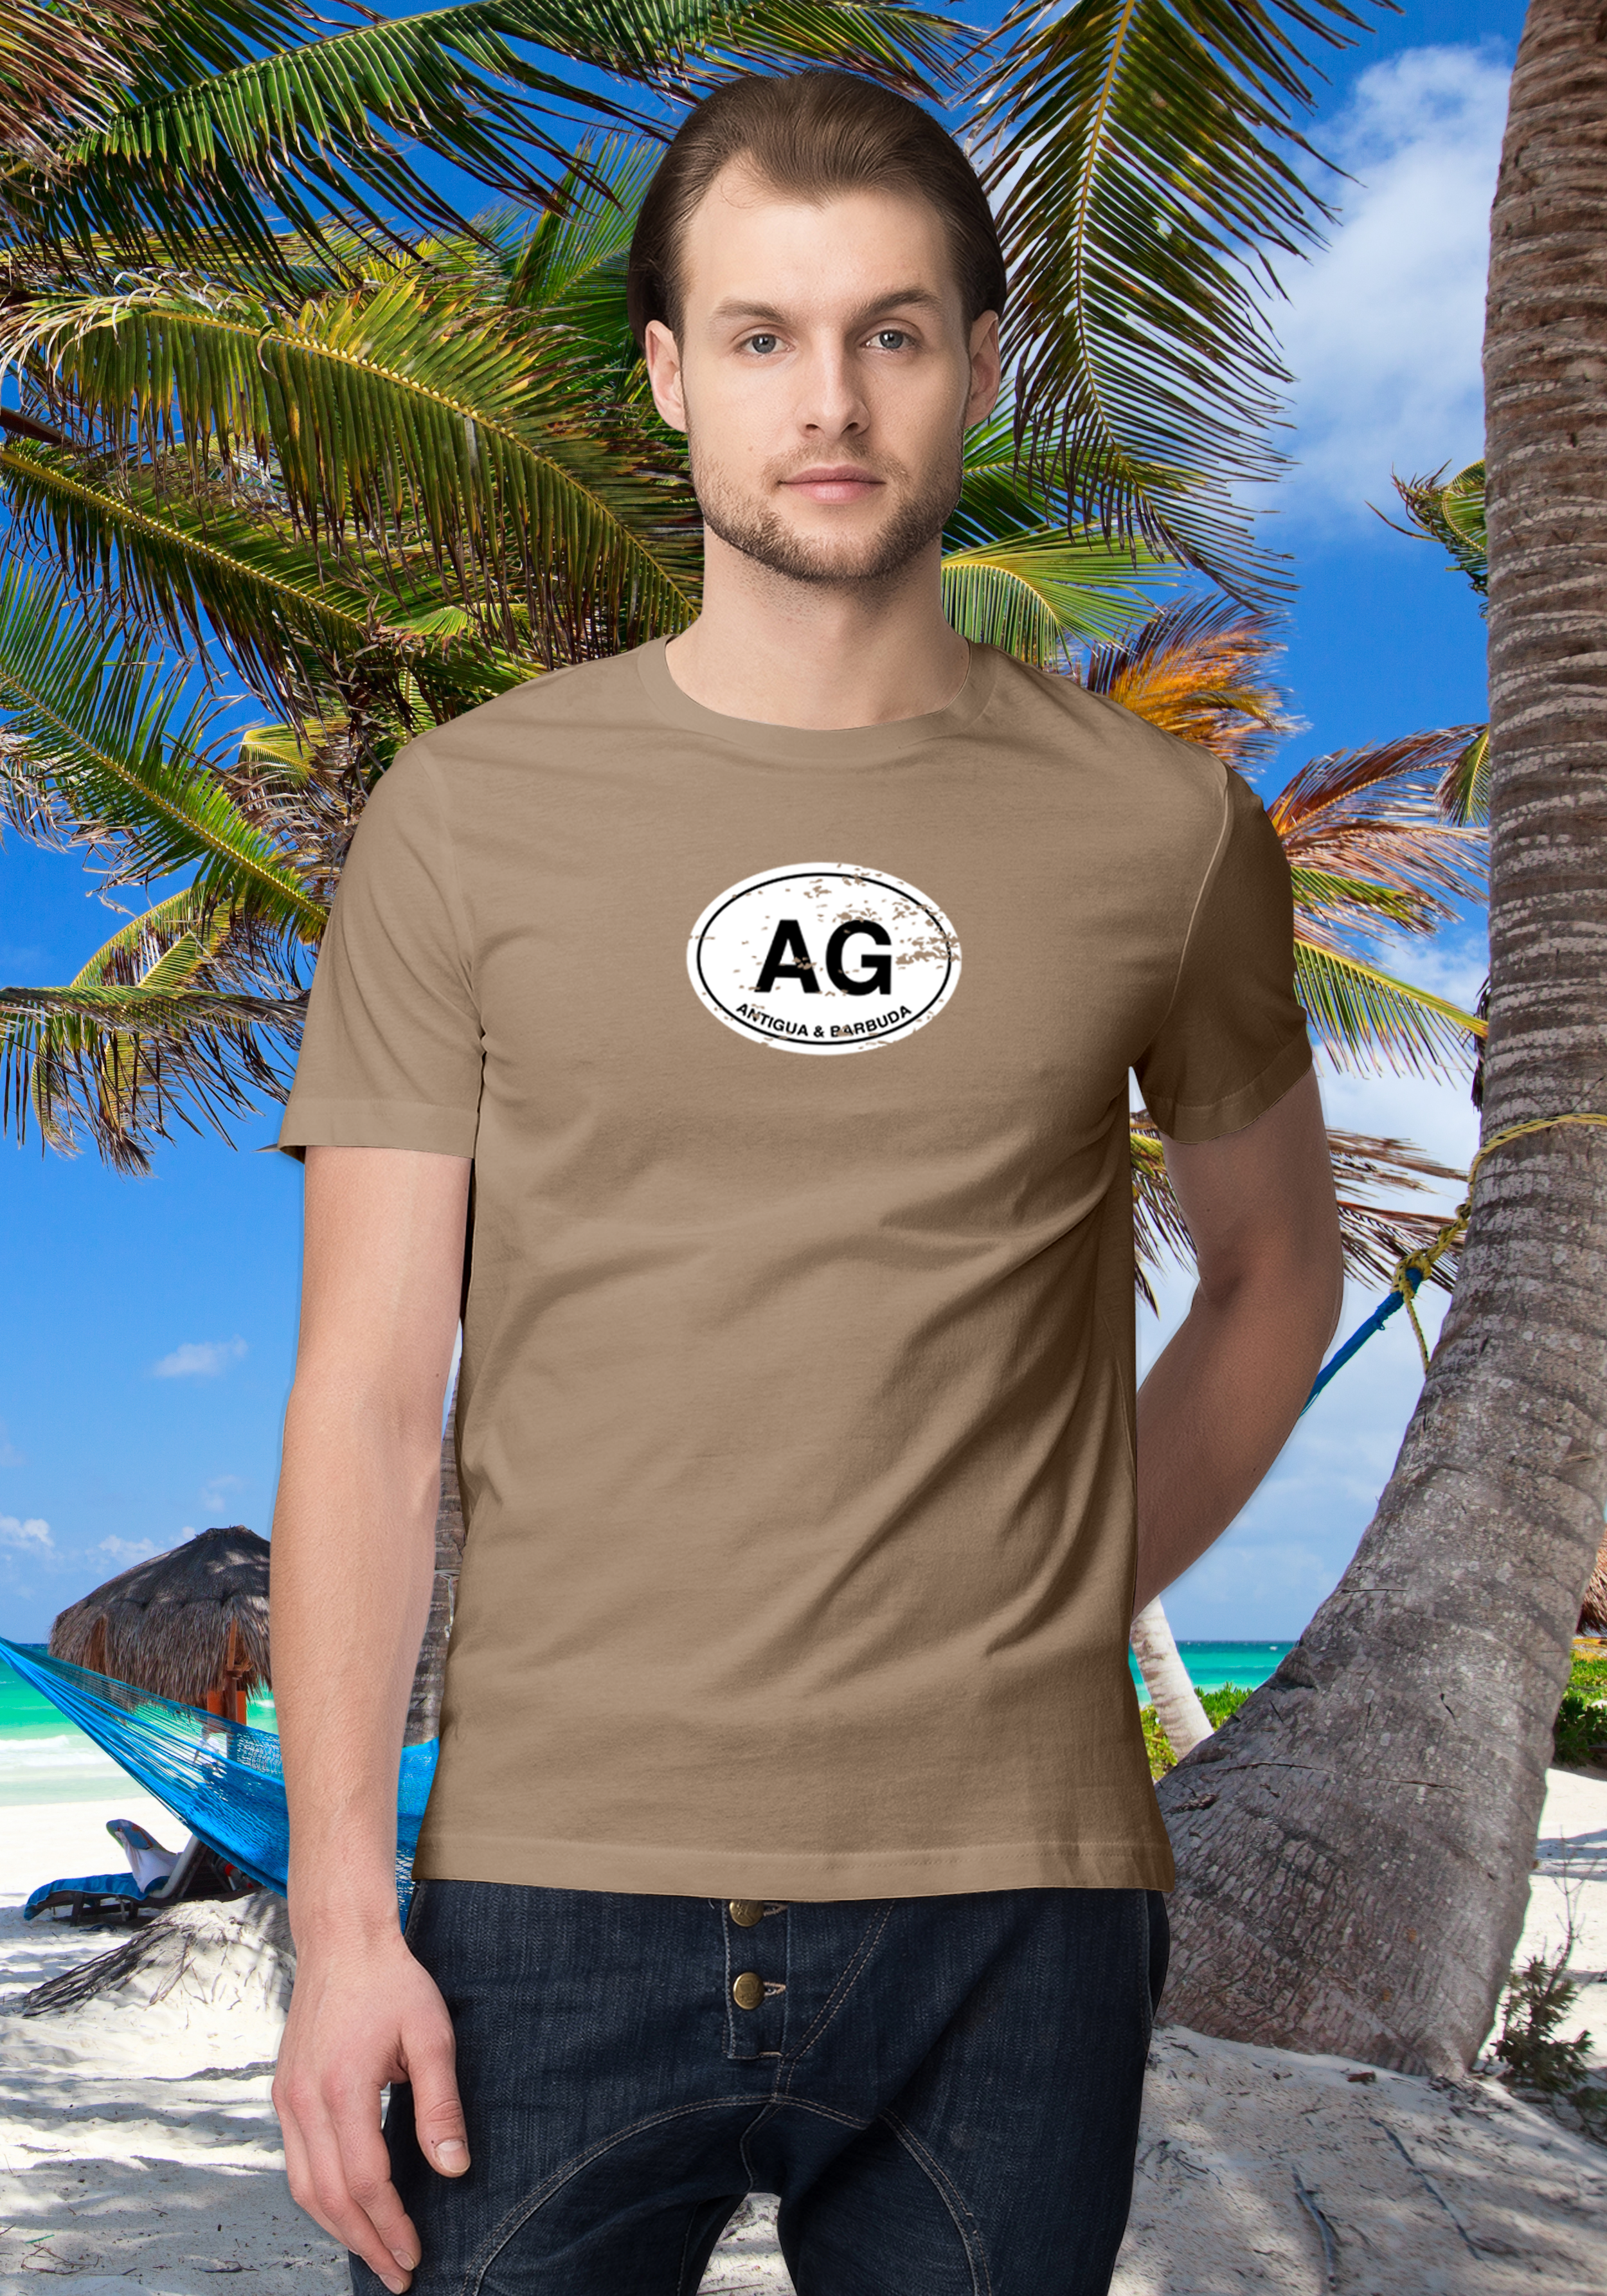 Antigua & Barbuda Men's Classic T-Shirt Souvenirs - My Destination Location